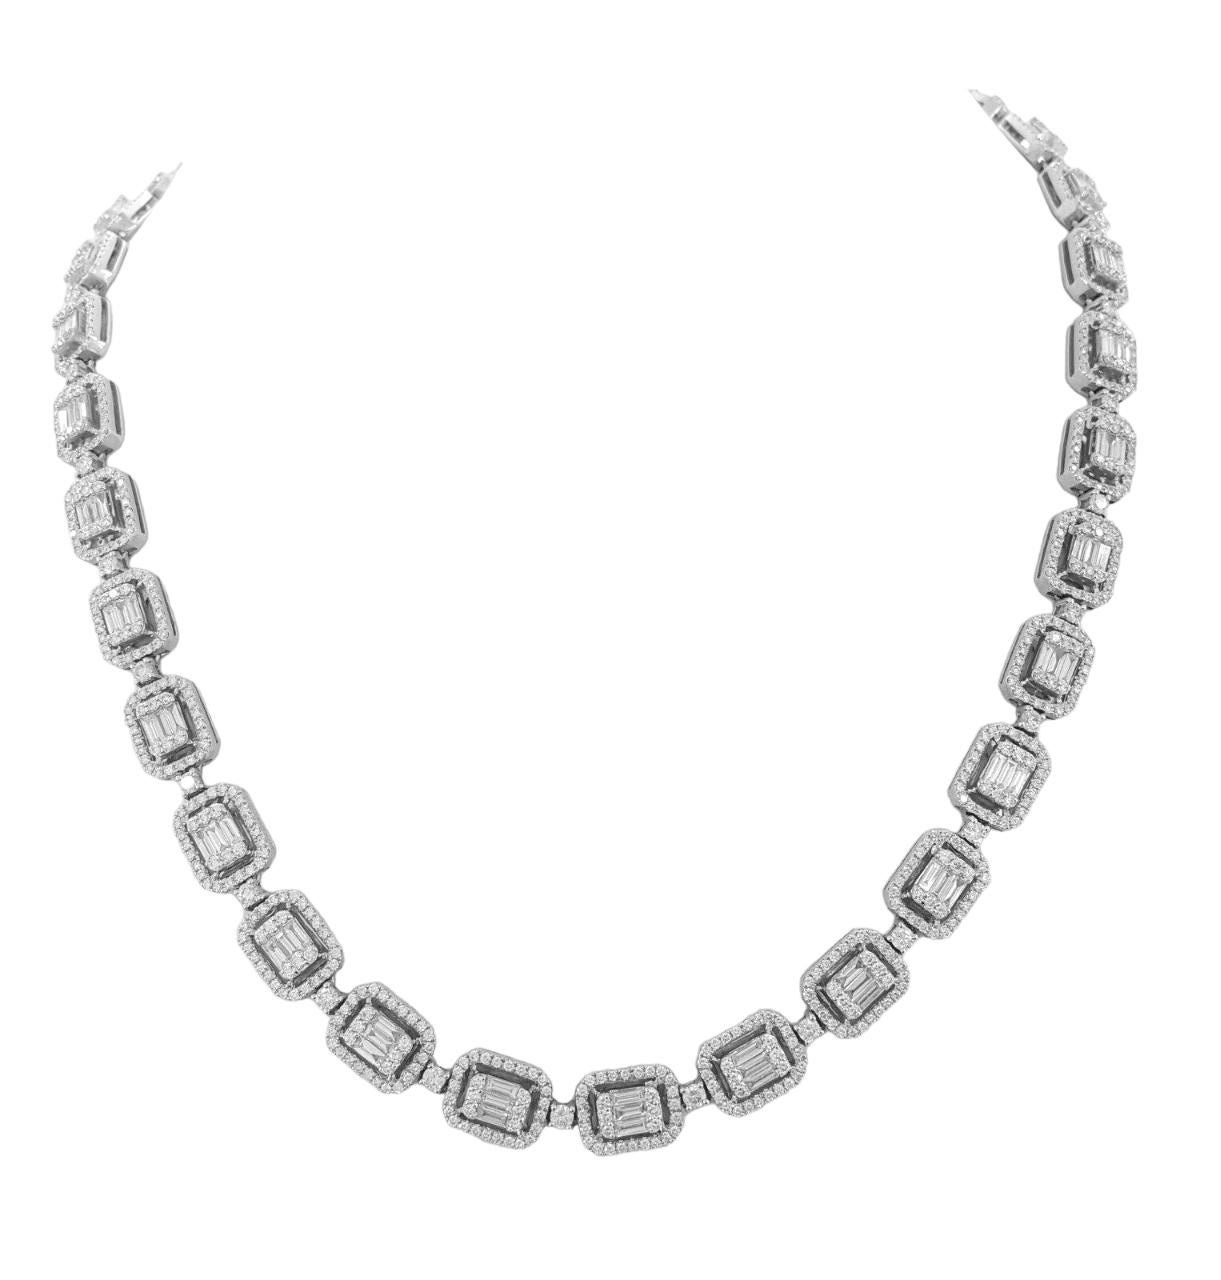 9 carat tennis necklace